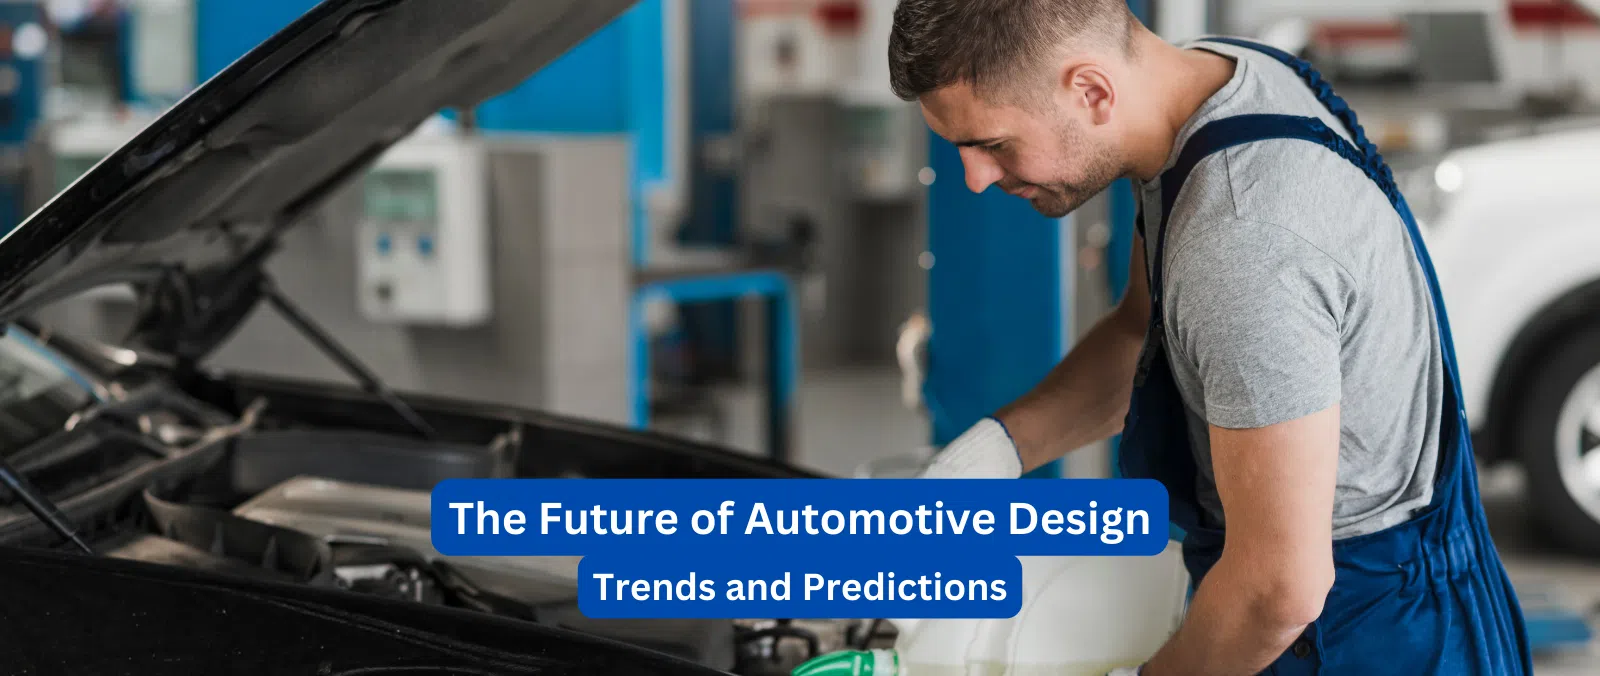 The Future of Automotive Design